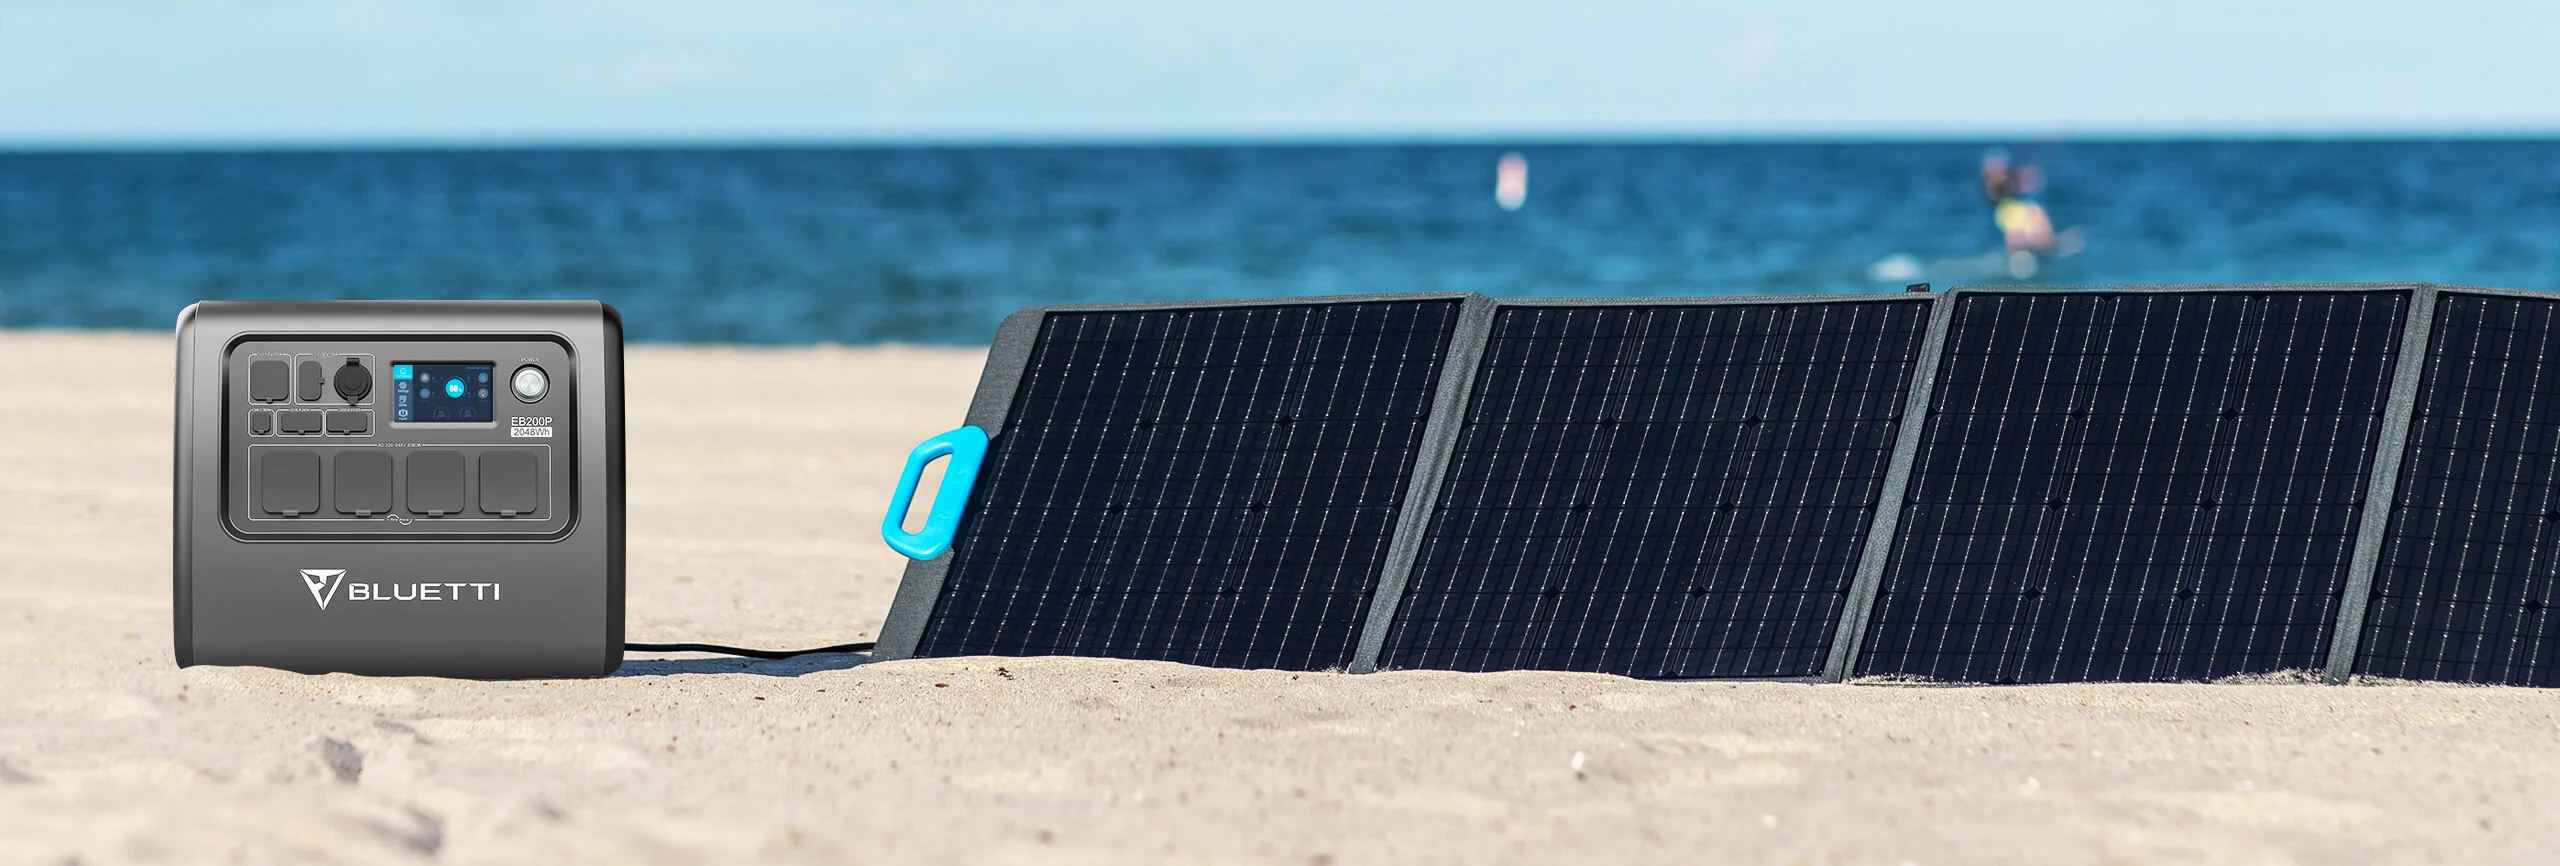 Bluetti Solar Panels on a West Australian beach